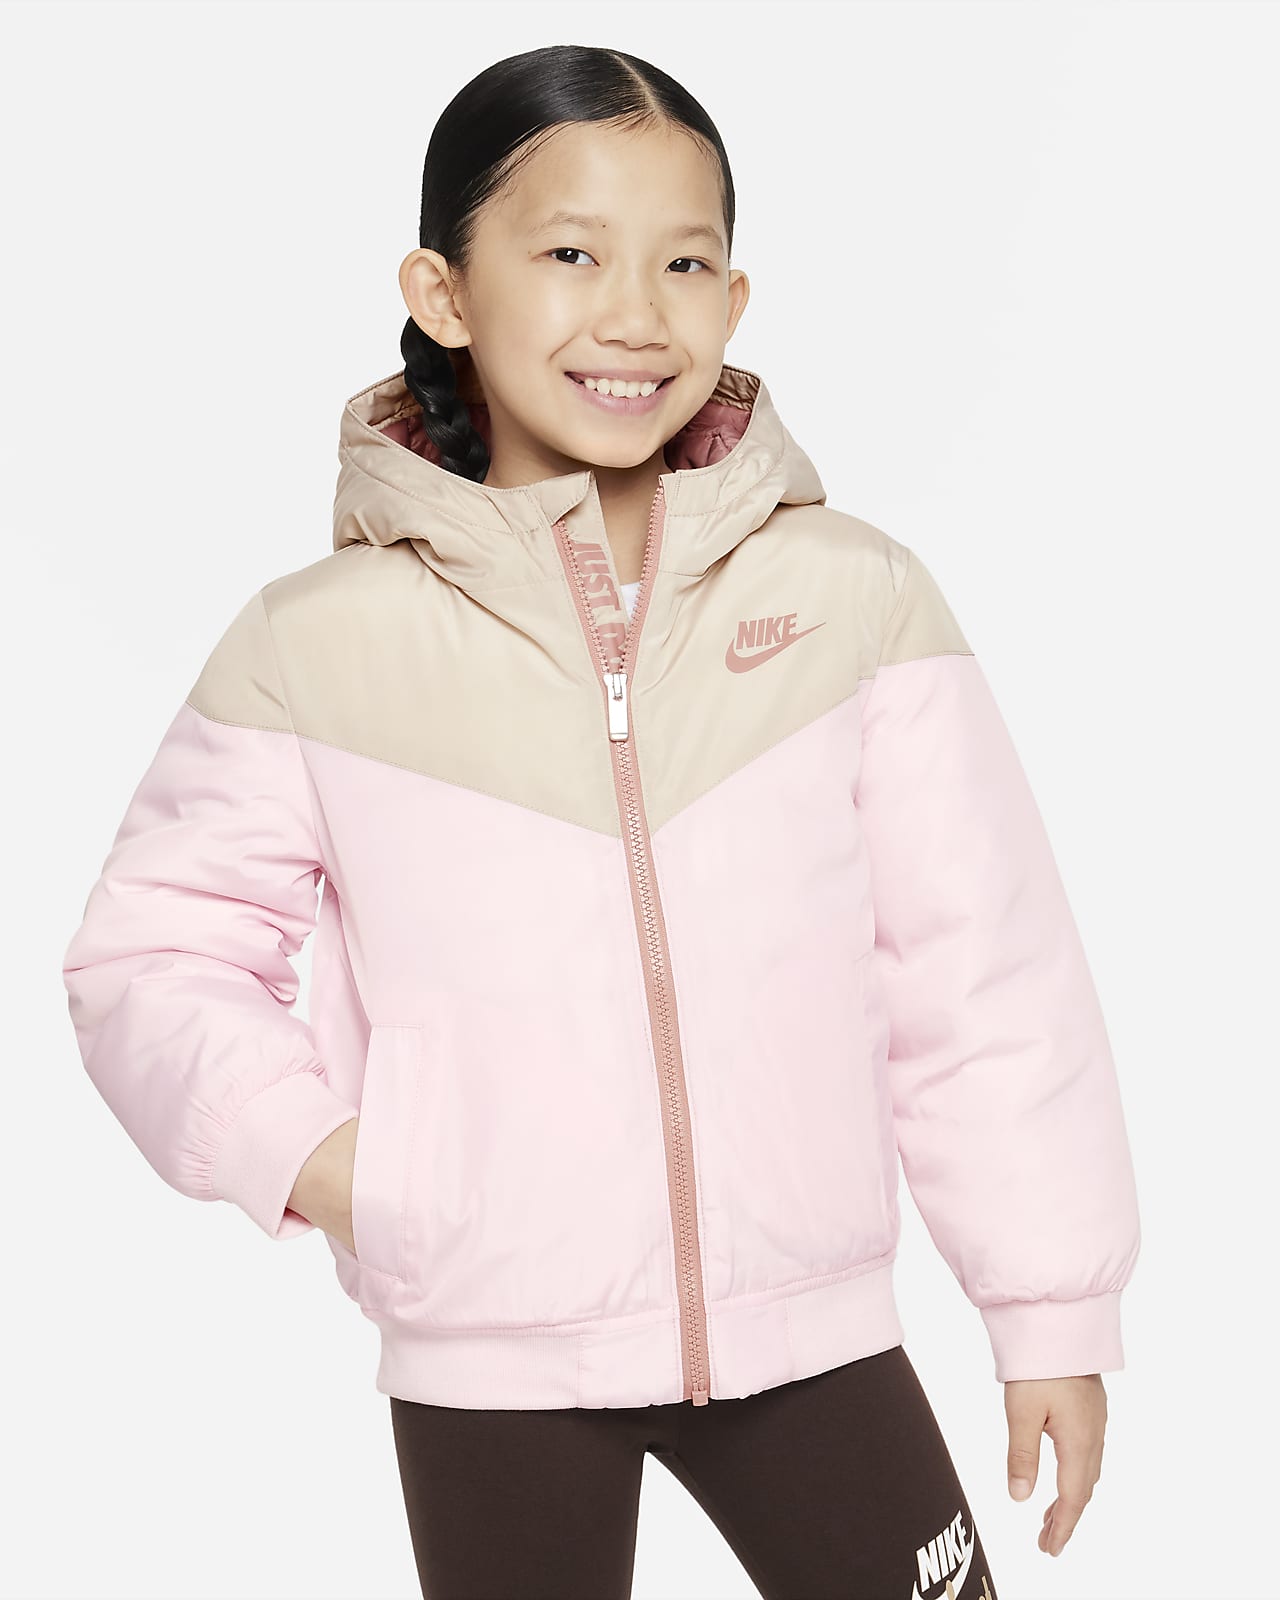 Nike Windrunner Insulated Jacket Little Kids Jacket